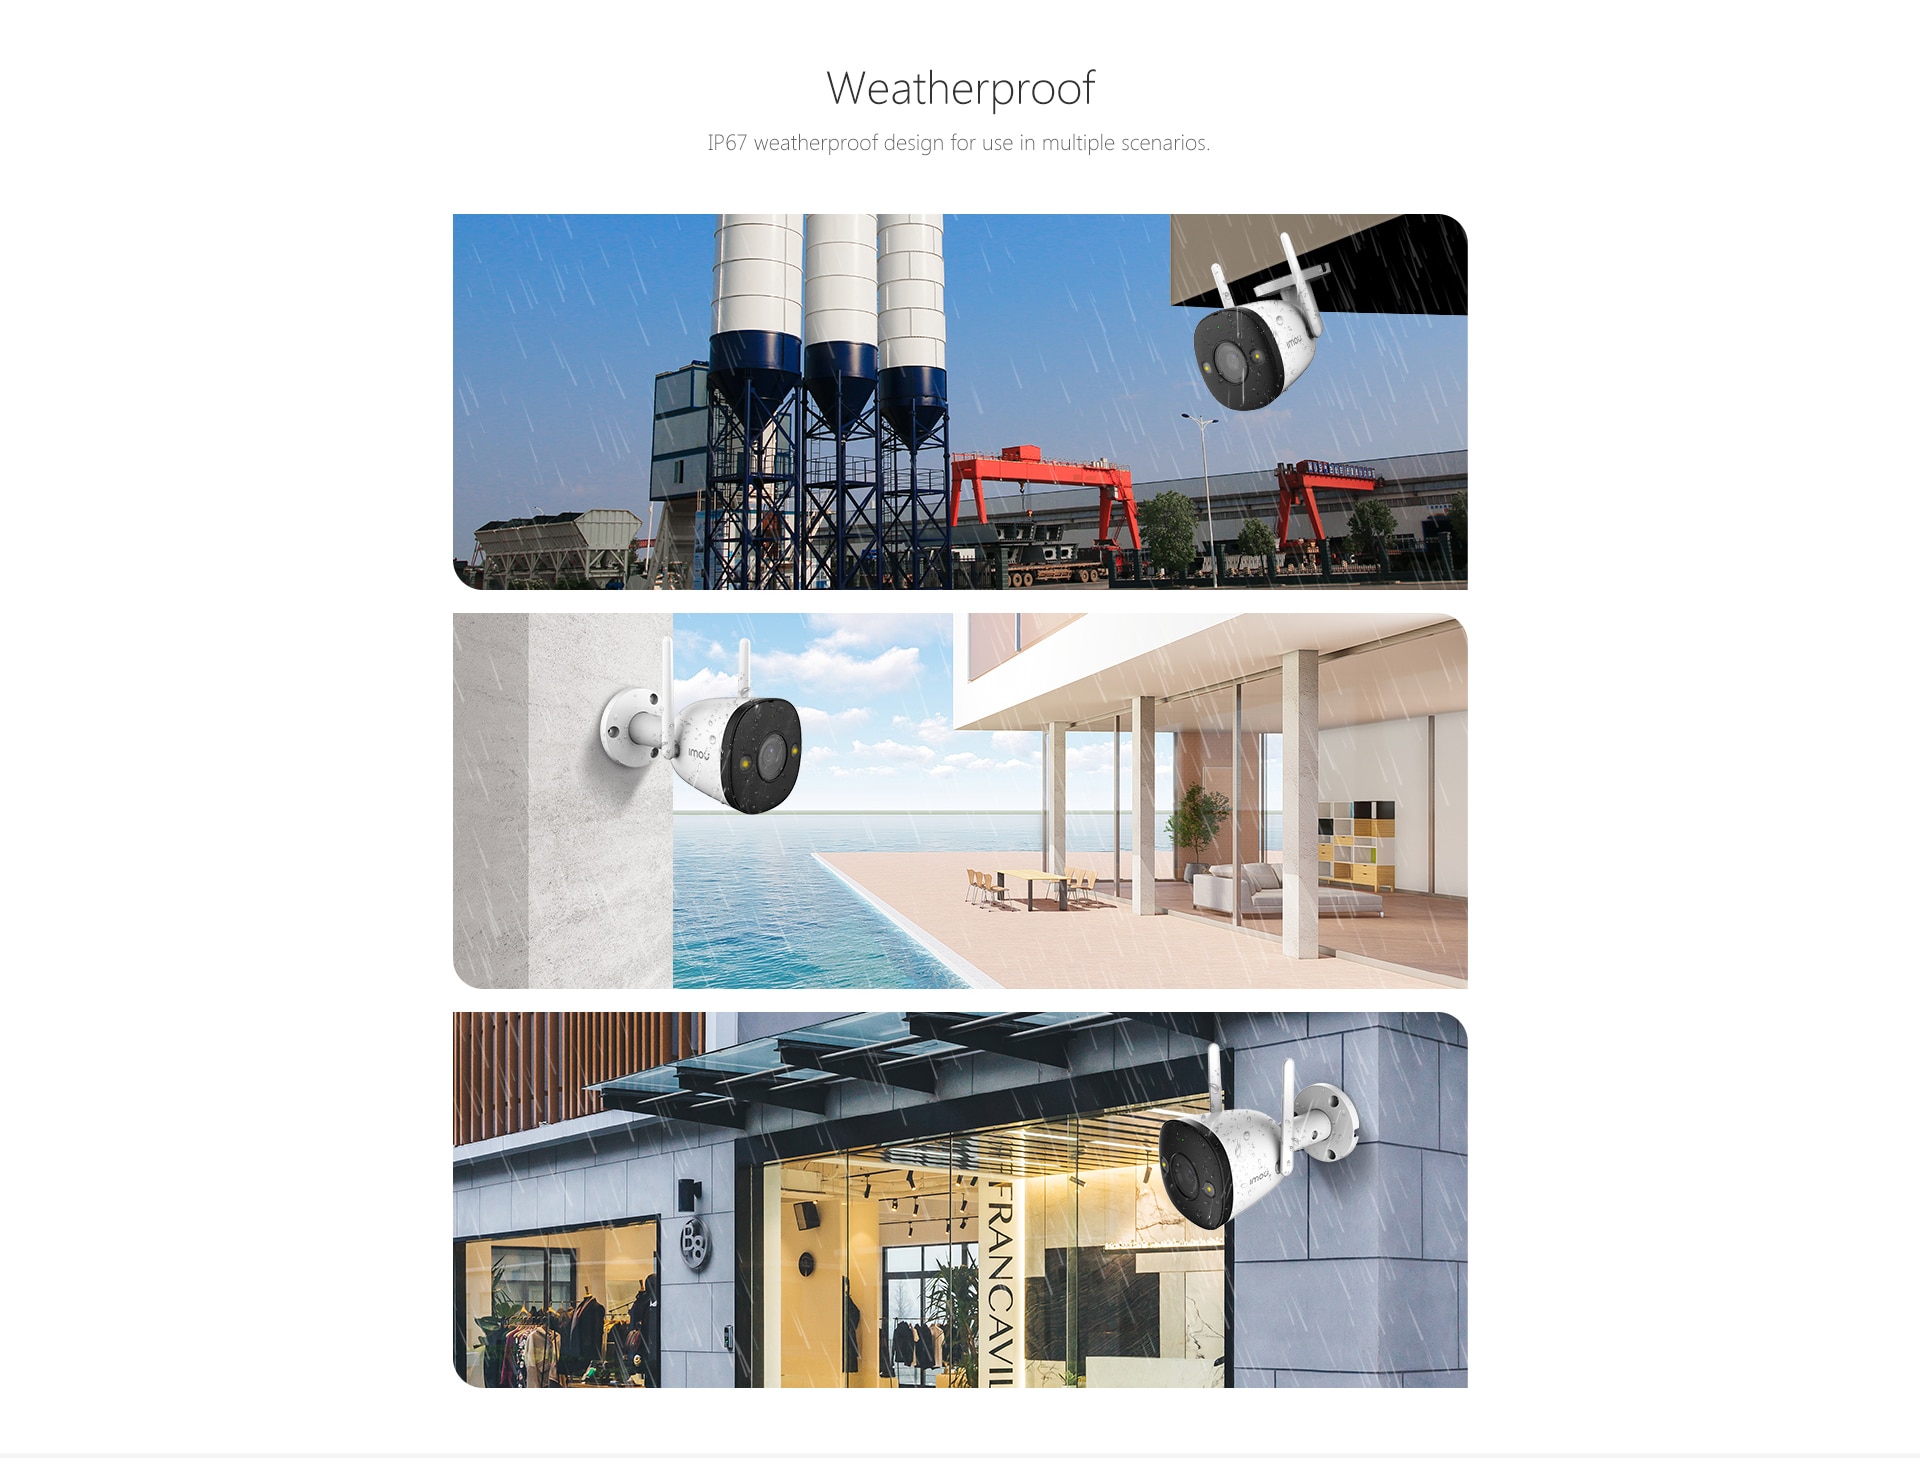 Color night vision wifi security cameras Dahua Imou 2E 4MP for outdoor € 81,08